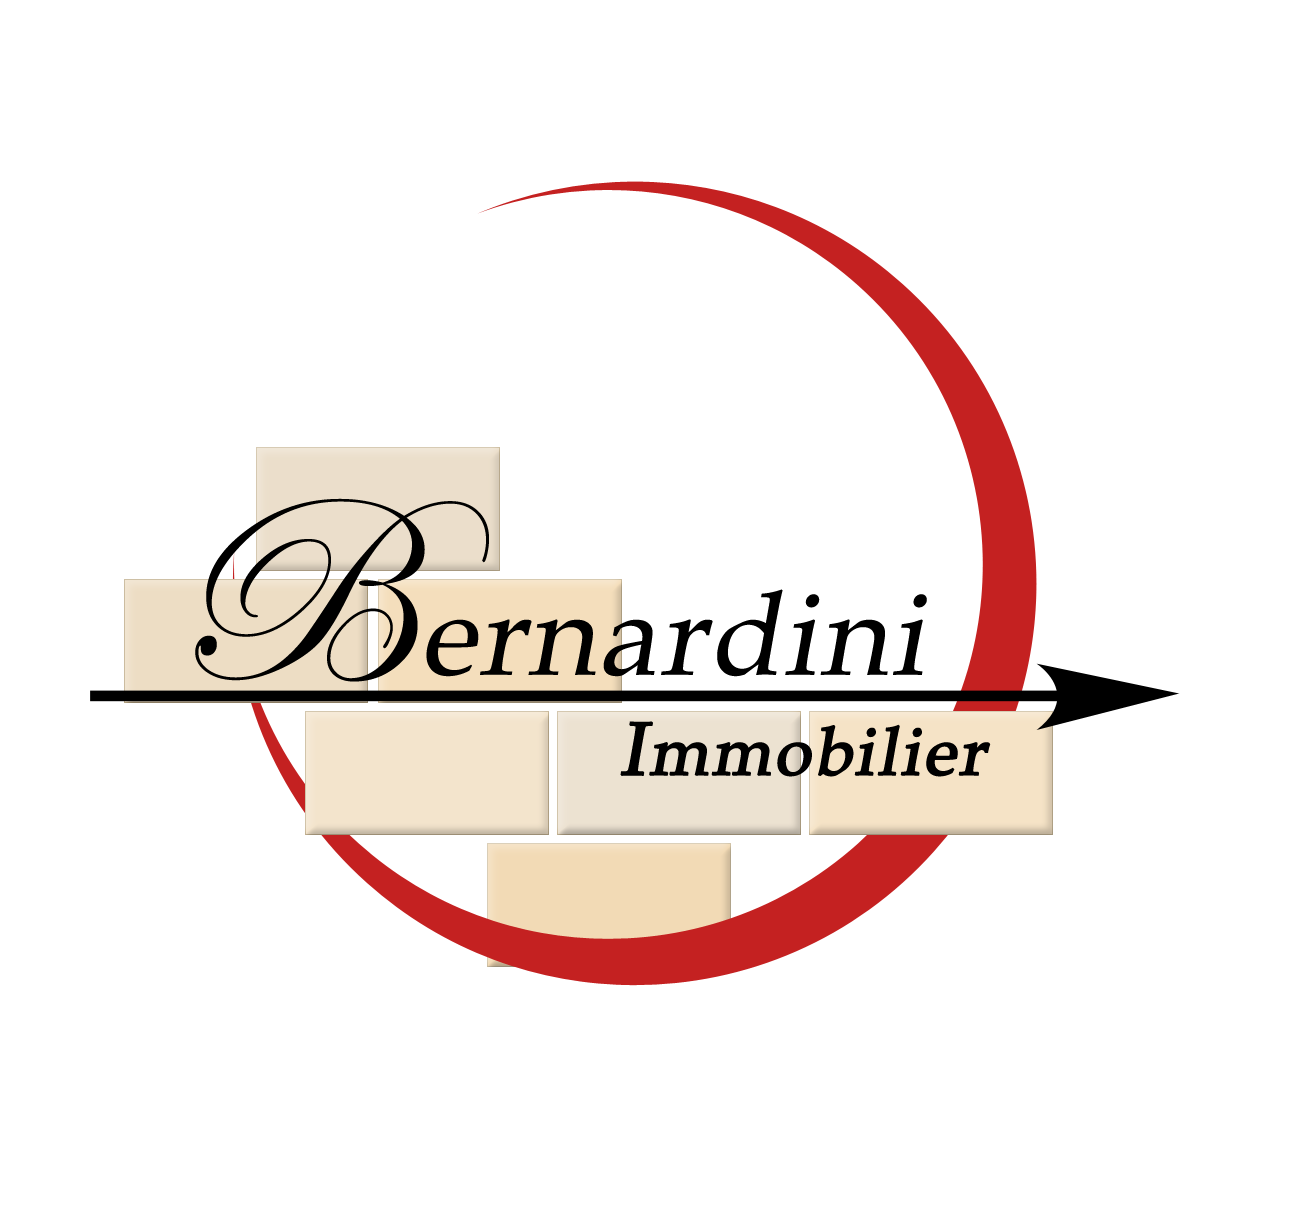 Bernardini-immobilier